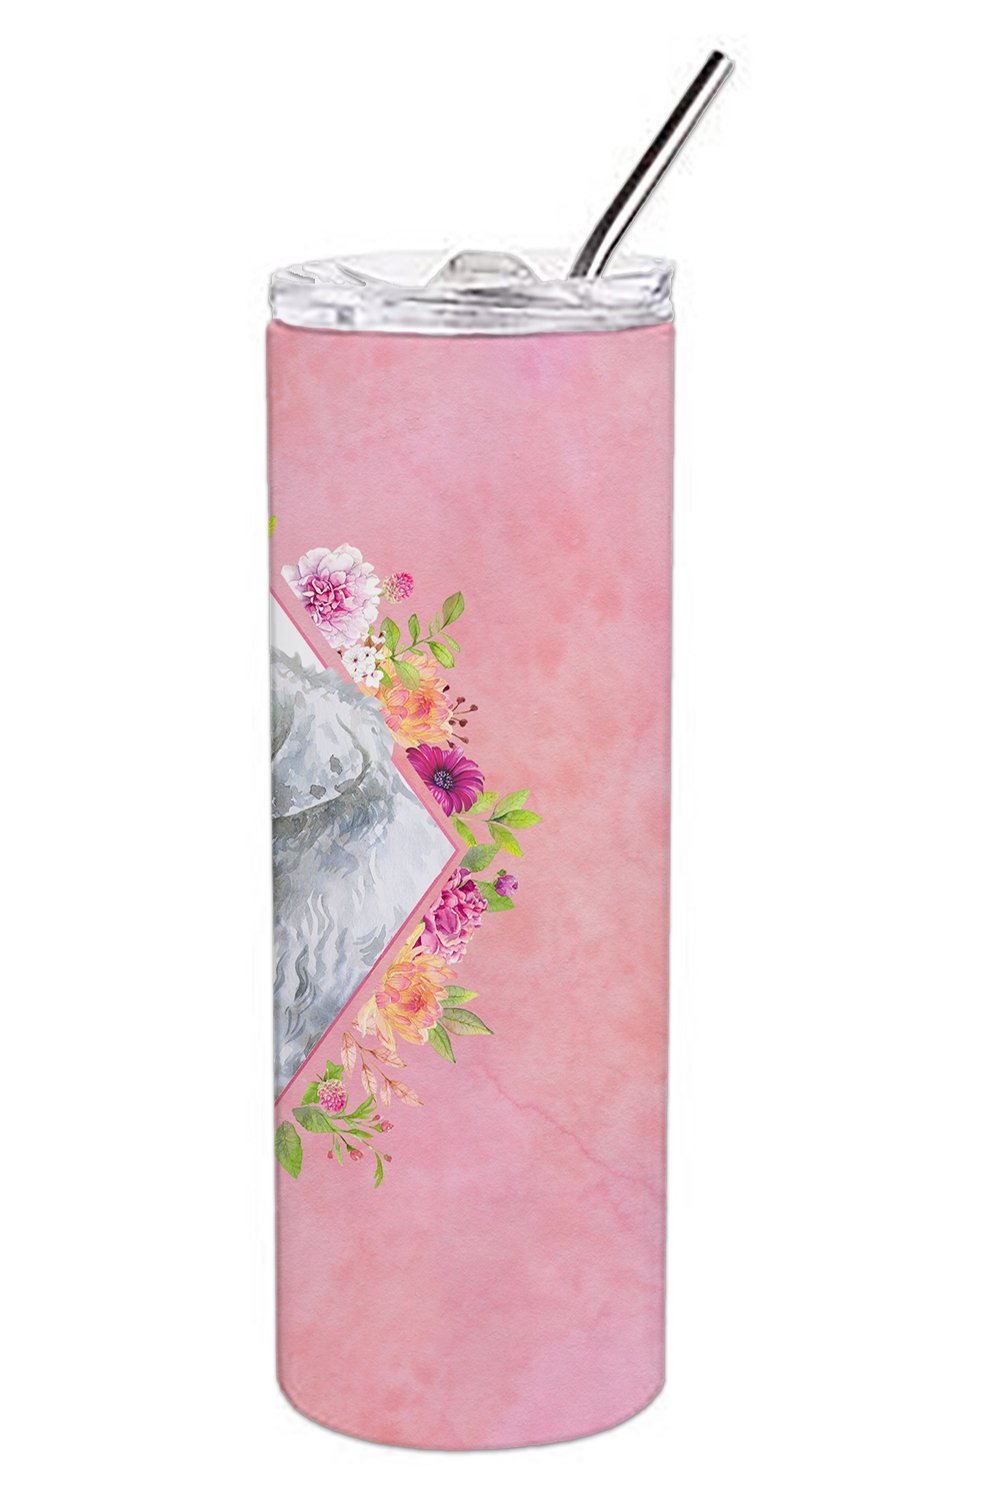 Sealyham Terrier Pink Flowers Double Walled Stainless Steel 20 oz Skinny Tumbler CK4180TBL20 by Caroline's Treasures